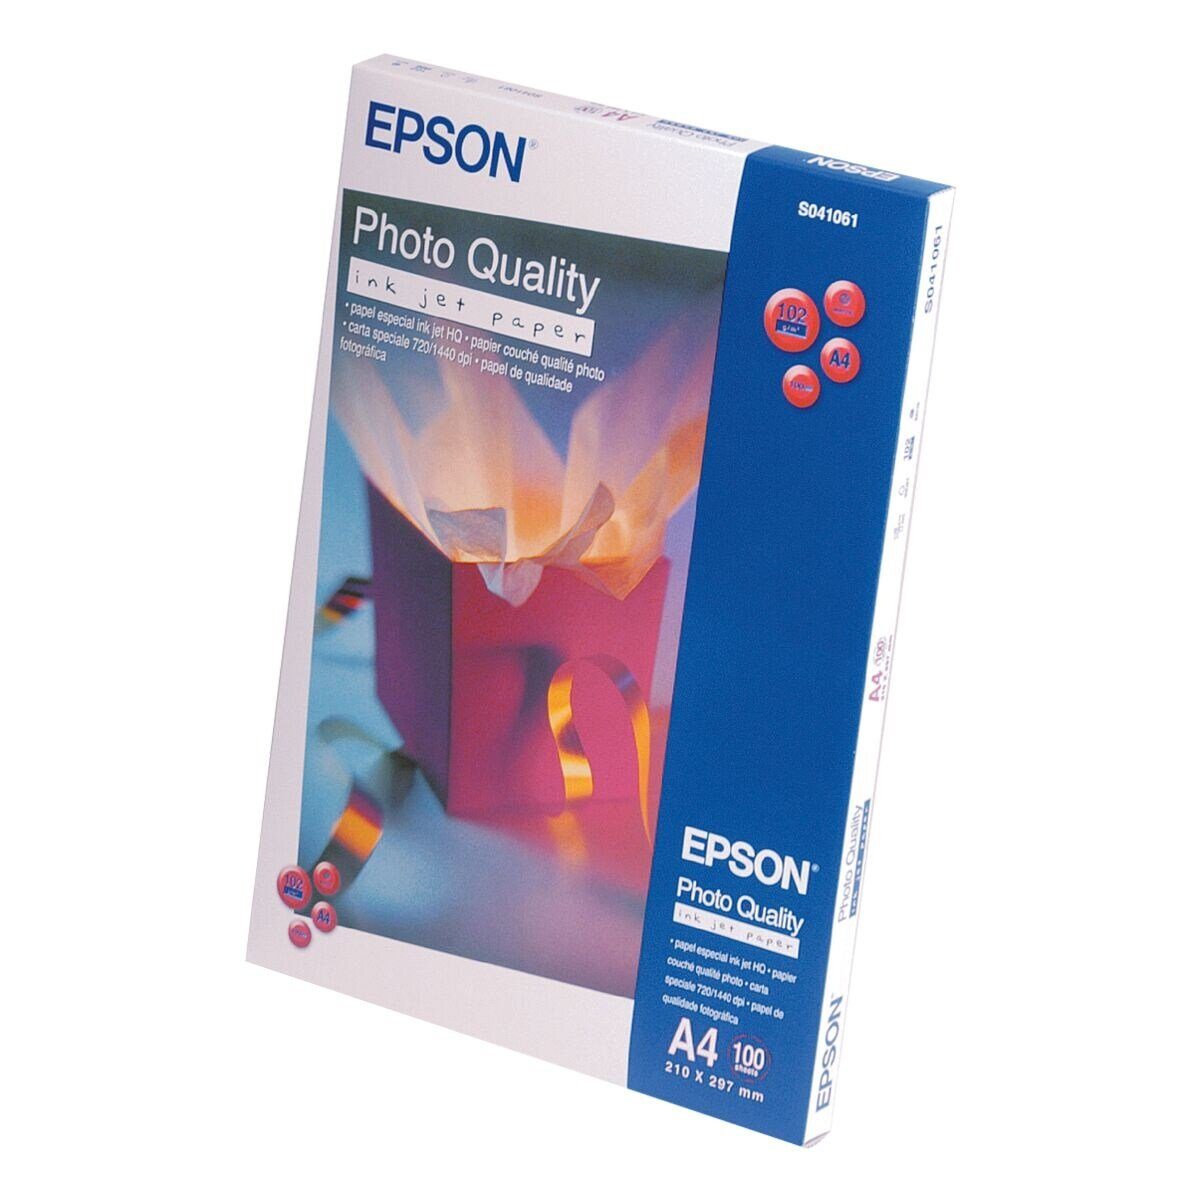 Epson Fotopapier Photo g/m², matt, Quality A4, 100 Blatt 102 Format Inkjet